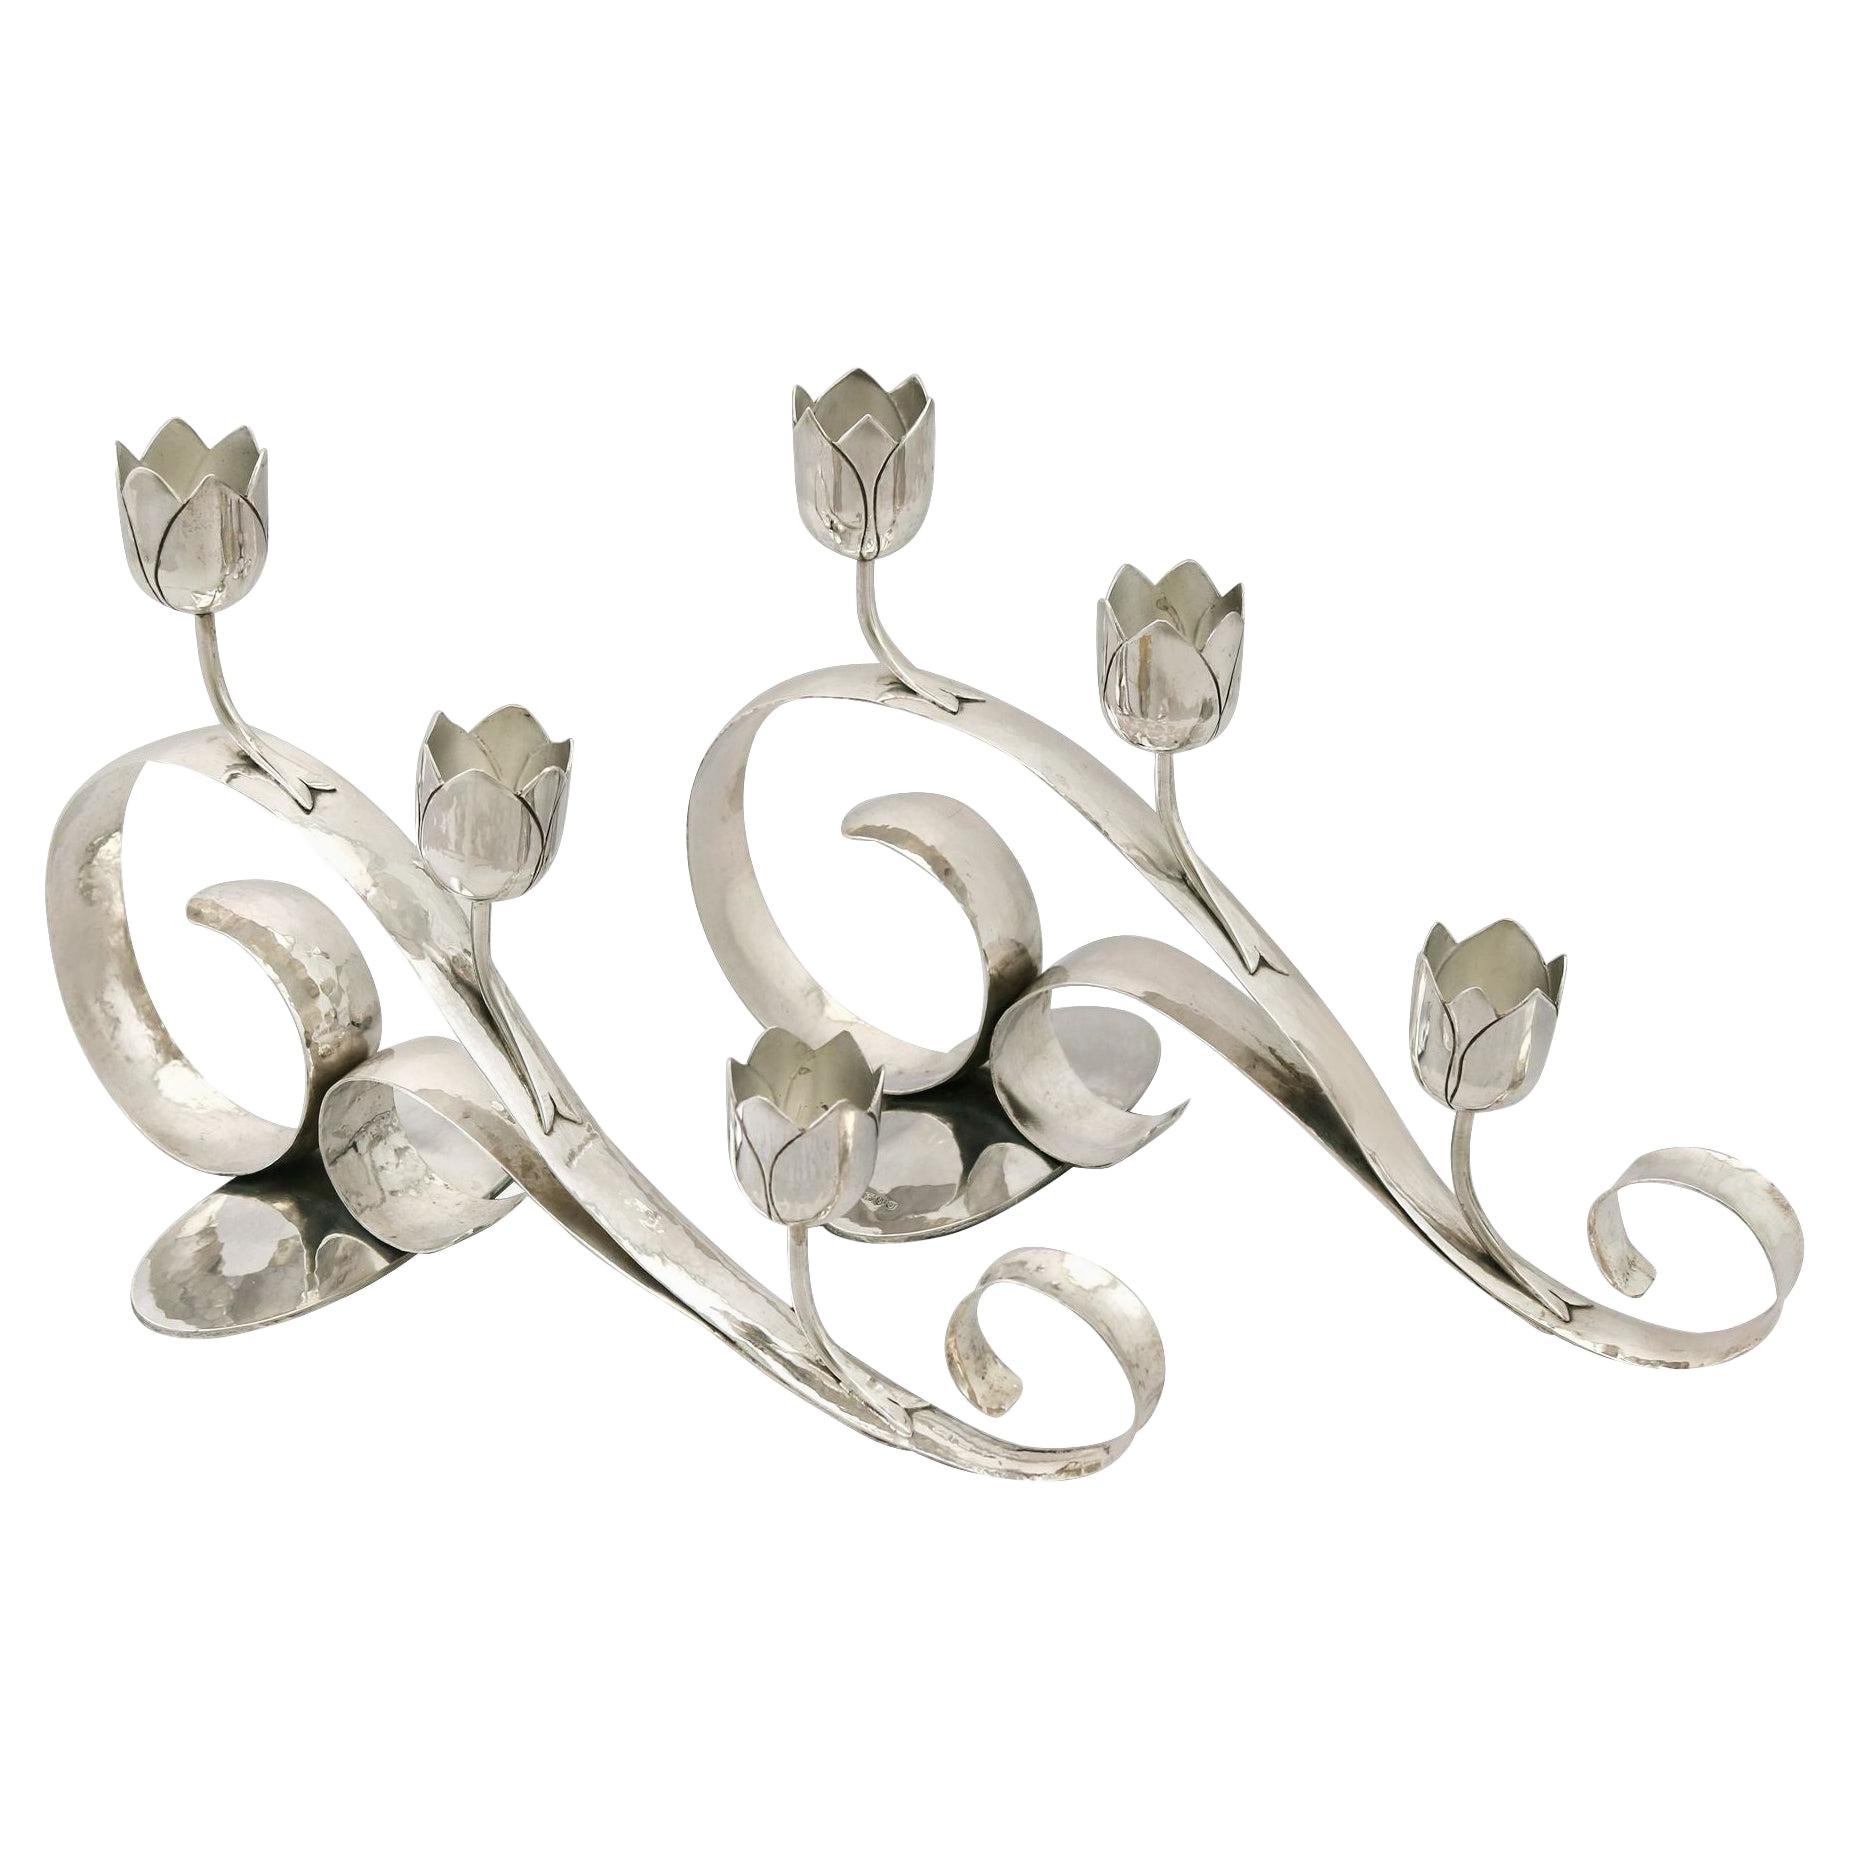 Vintage 1959 Art Nouveau Style Sterling Silver Three-Light Candelabra